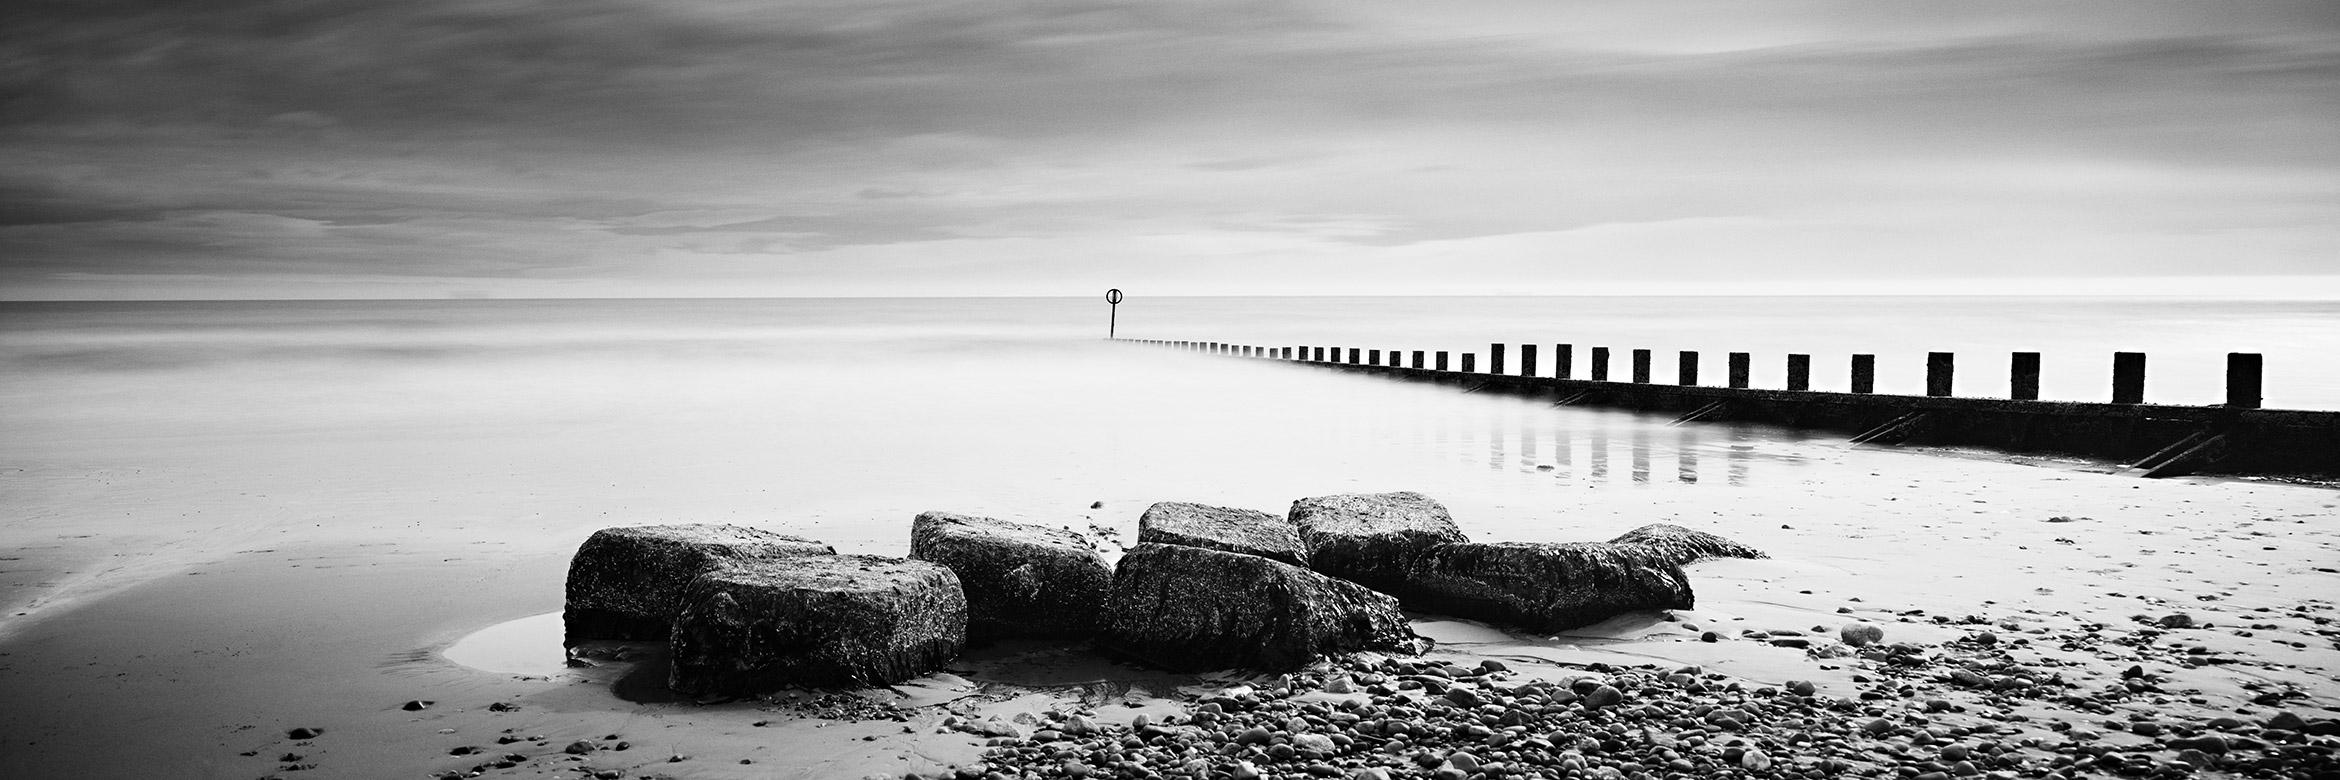 Gerald Berghammer Black and White Photograph - Wavebreaker, Panorama, Rocks, Scotland, Black & White long exposure photography